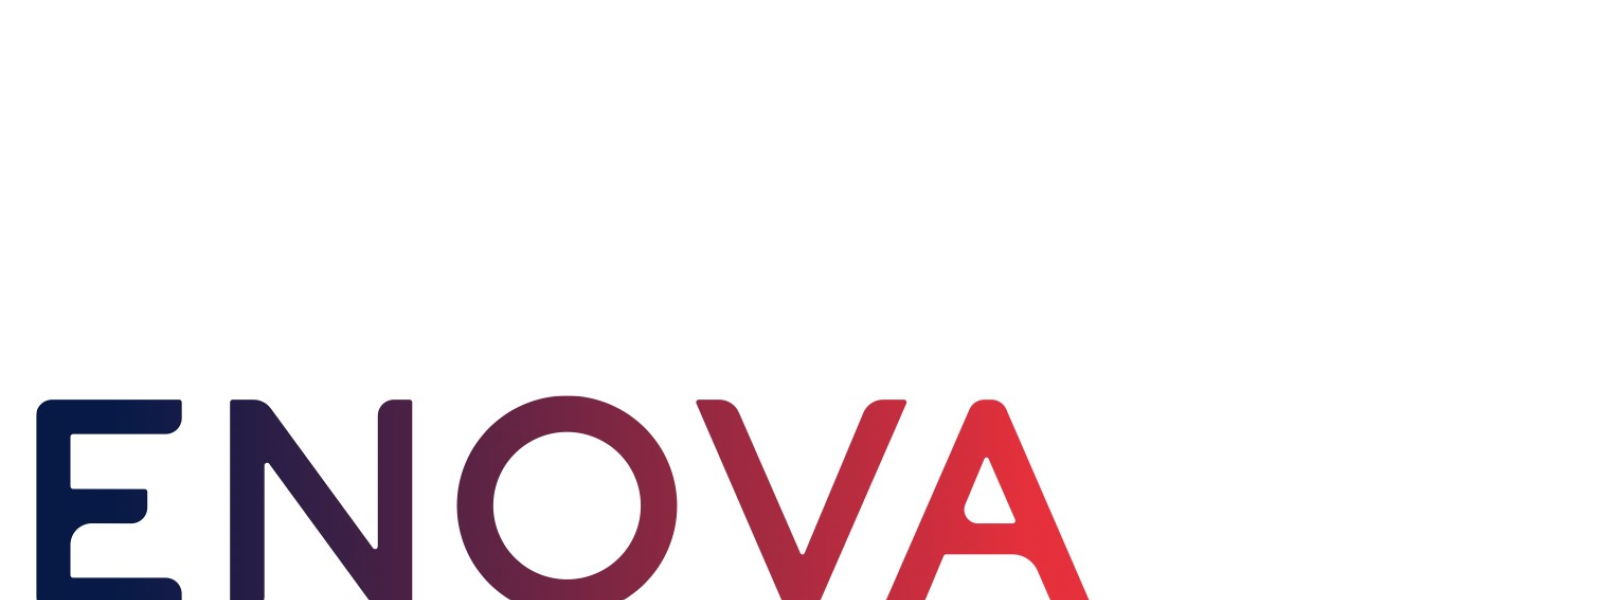 ENOVA logo